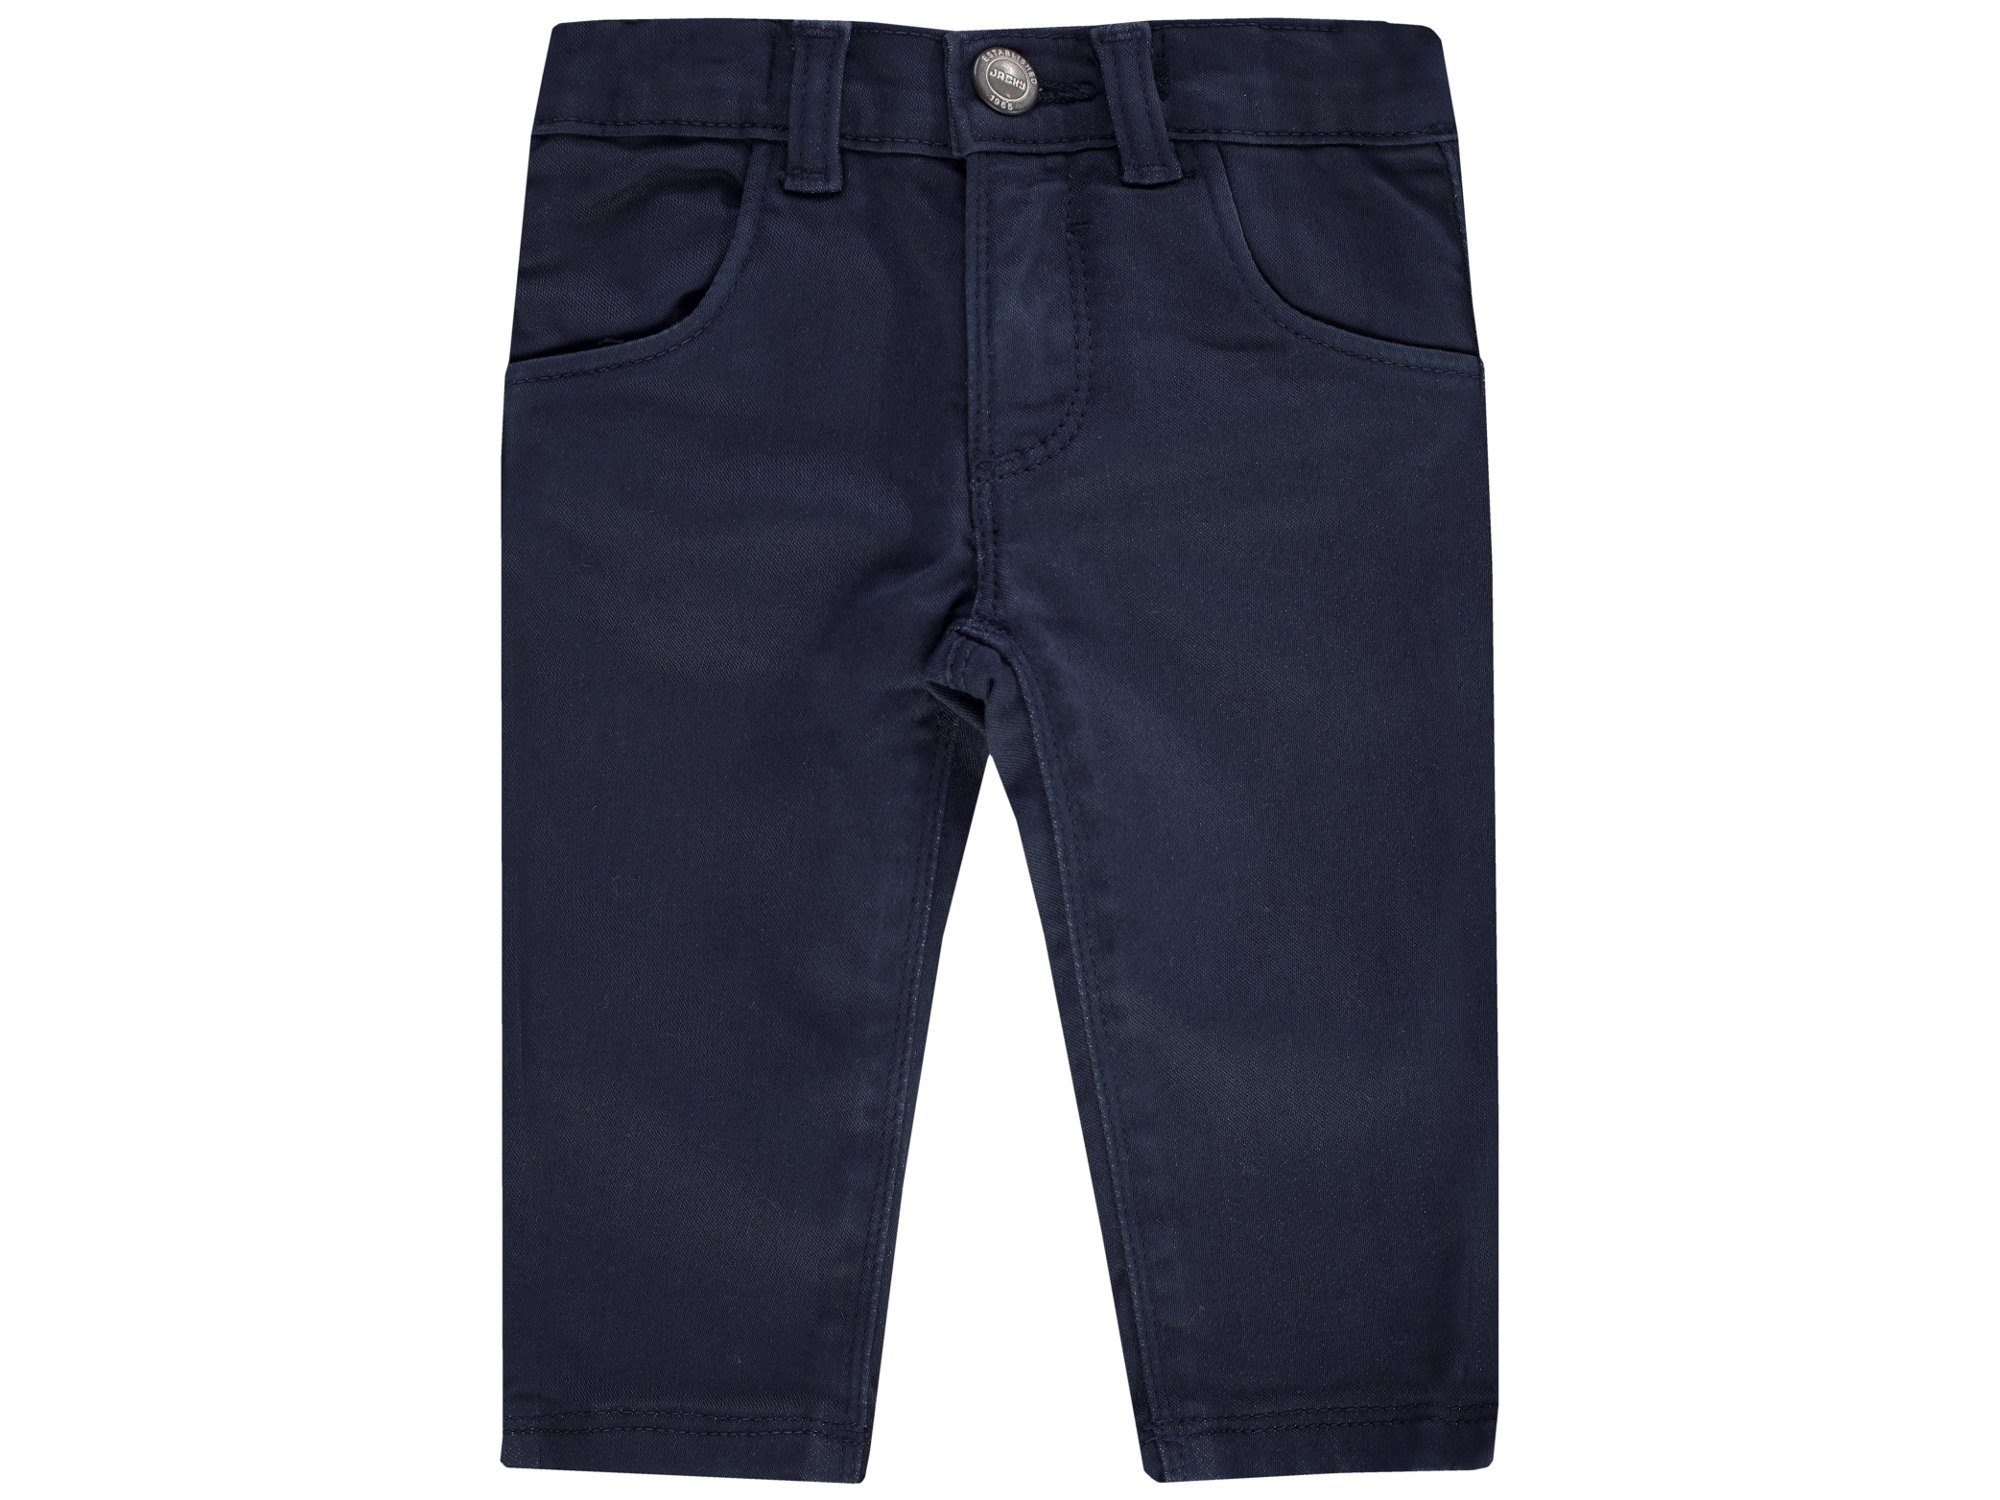 Jeans Jeanshose JACKY (3721510) Jacky CLASSIC BOYS Bequeme